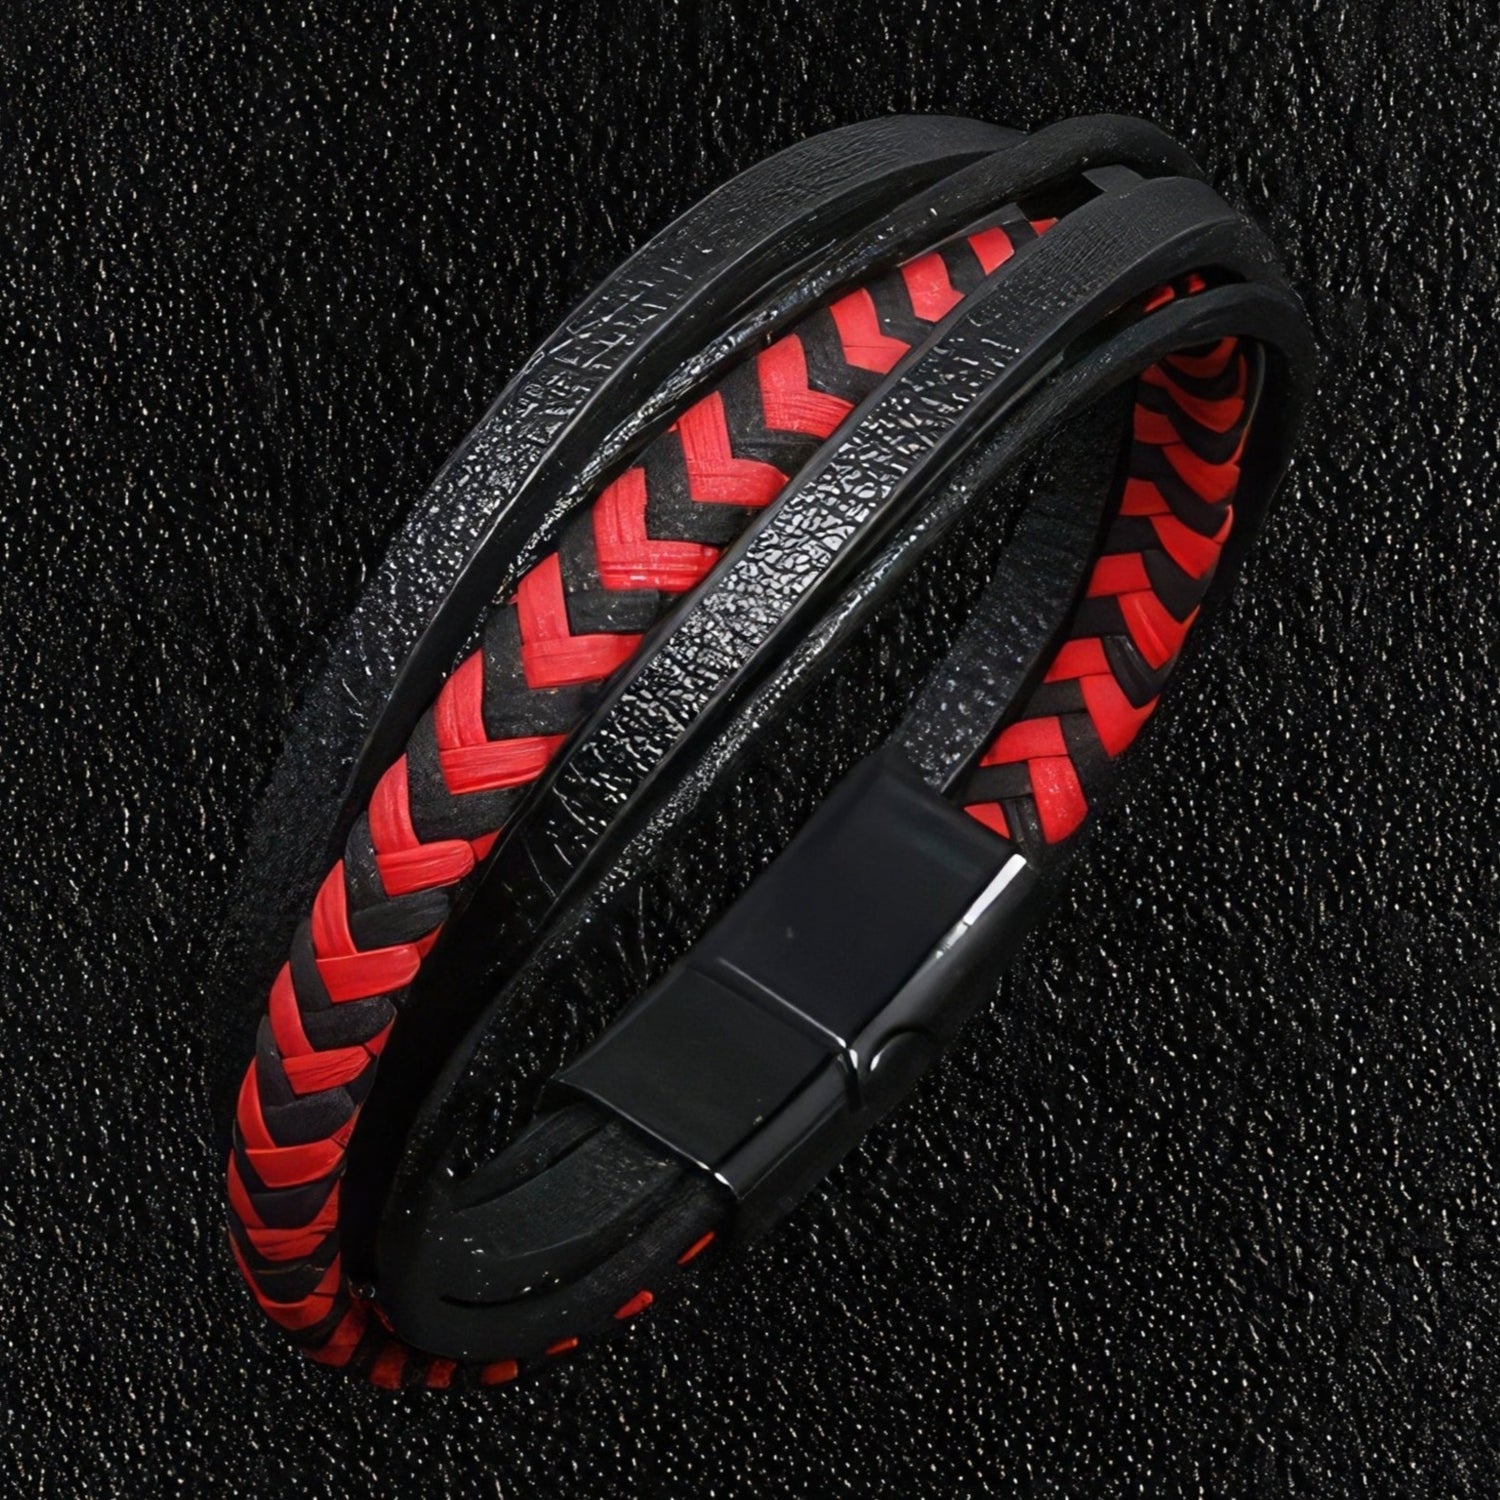 Black leather multi stranded bracelet with red arrows.